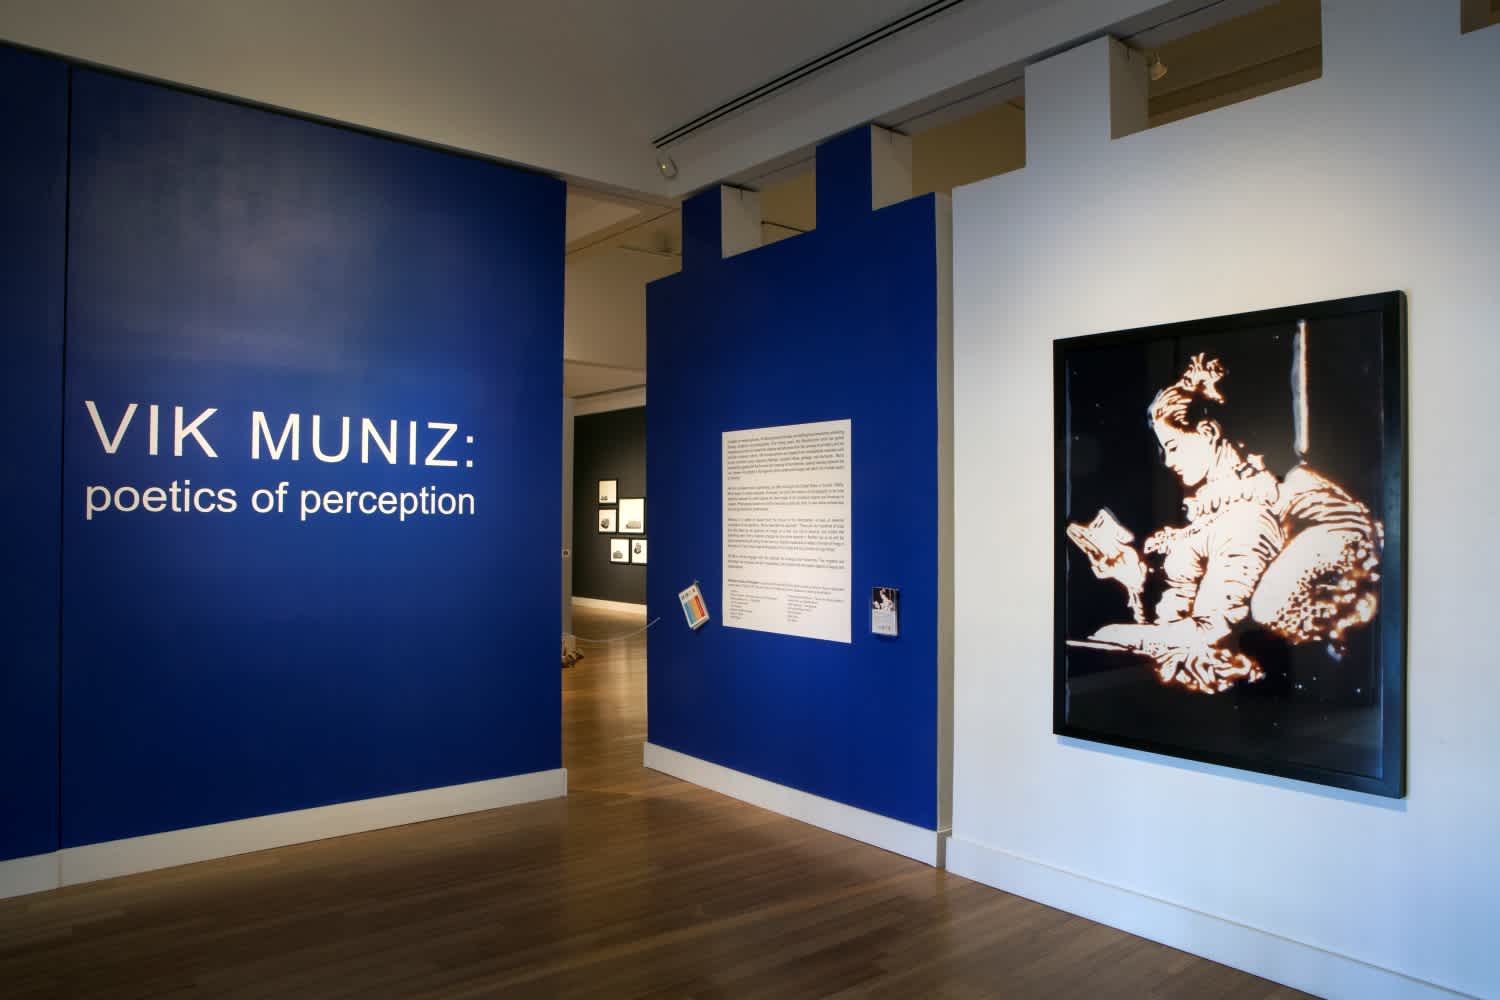 Blue painted walls in the Virginia Museum of Contemporary Art Galleries reading Vik Muniz: Poetics of Perception.